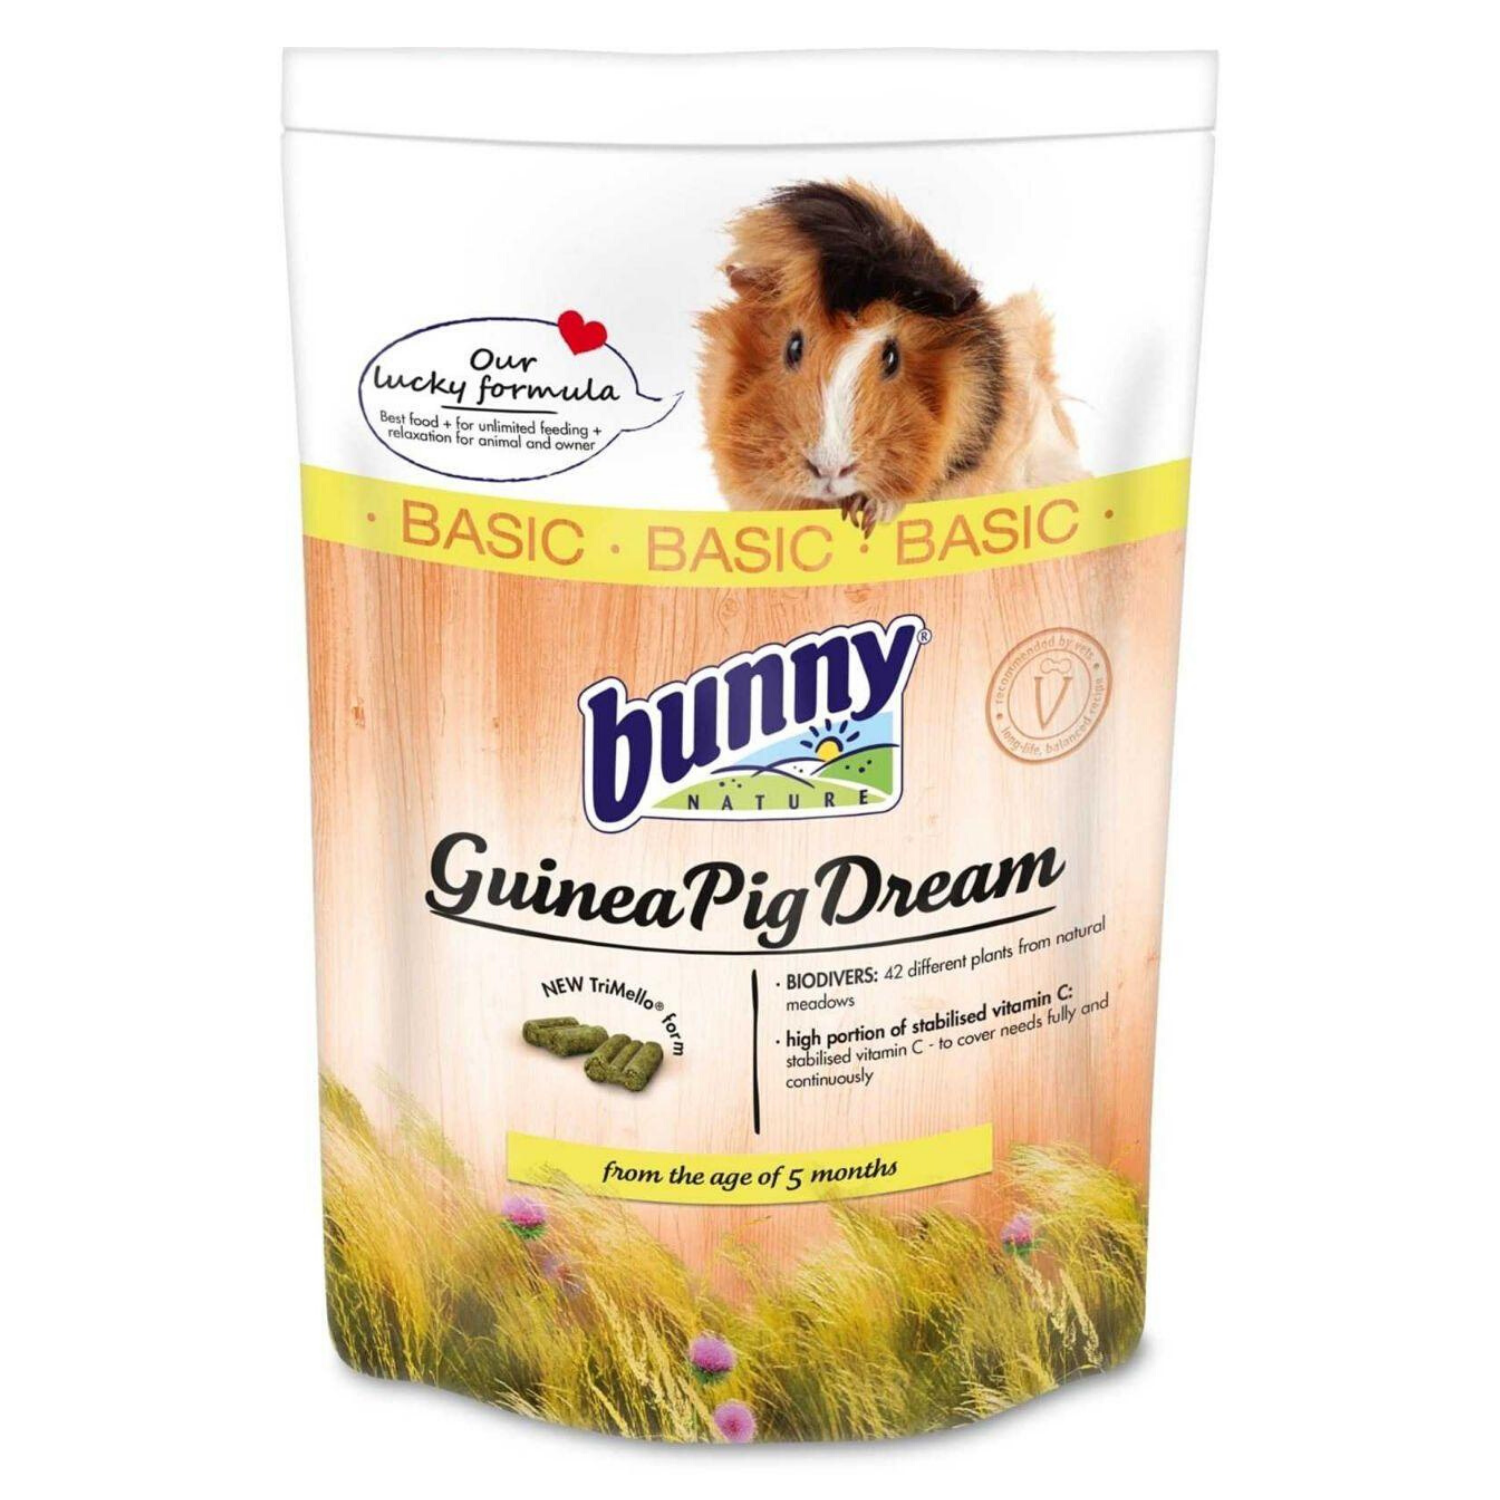 [SAMPLE] Bunny Nature Guinea Pig Dream Basic - 150g